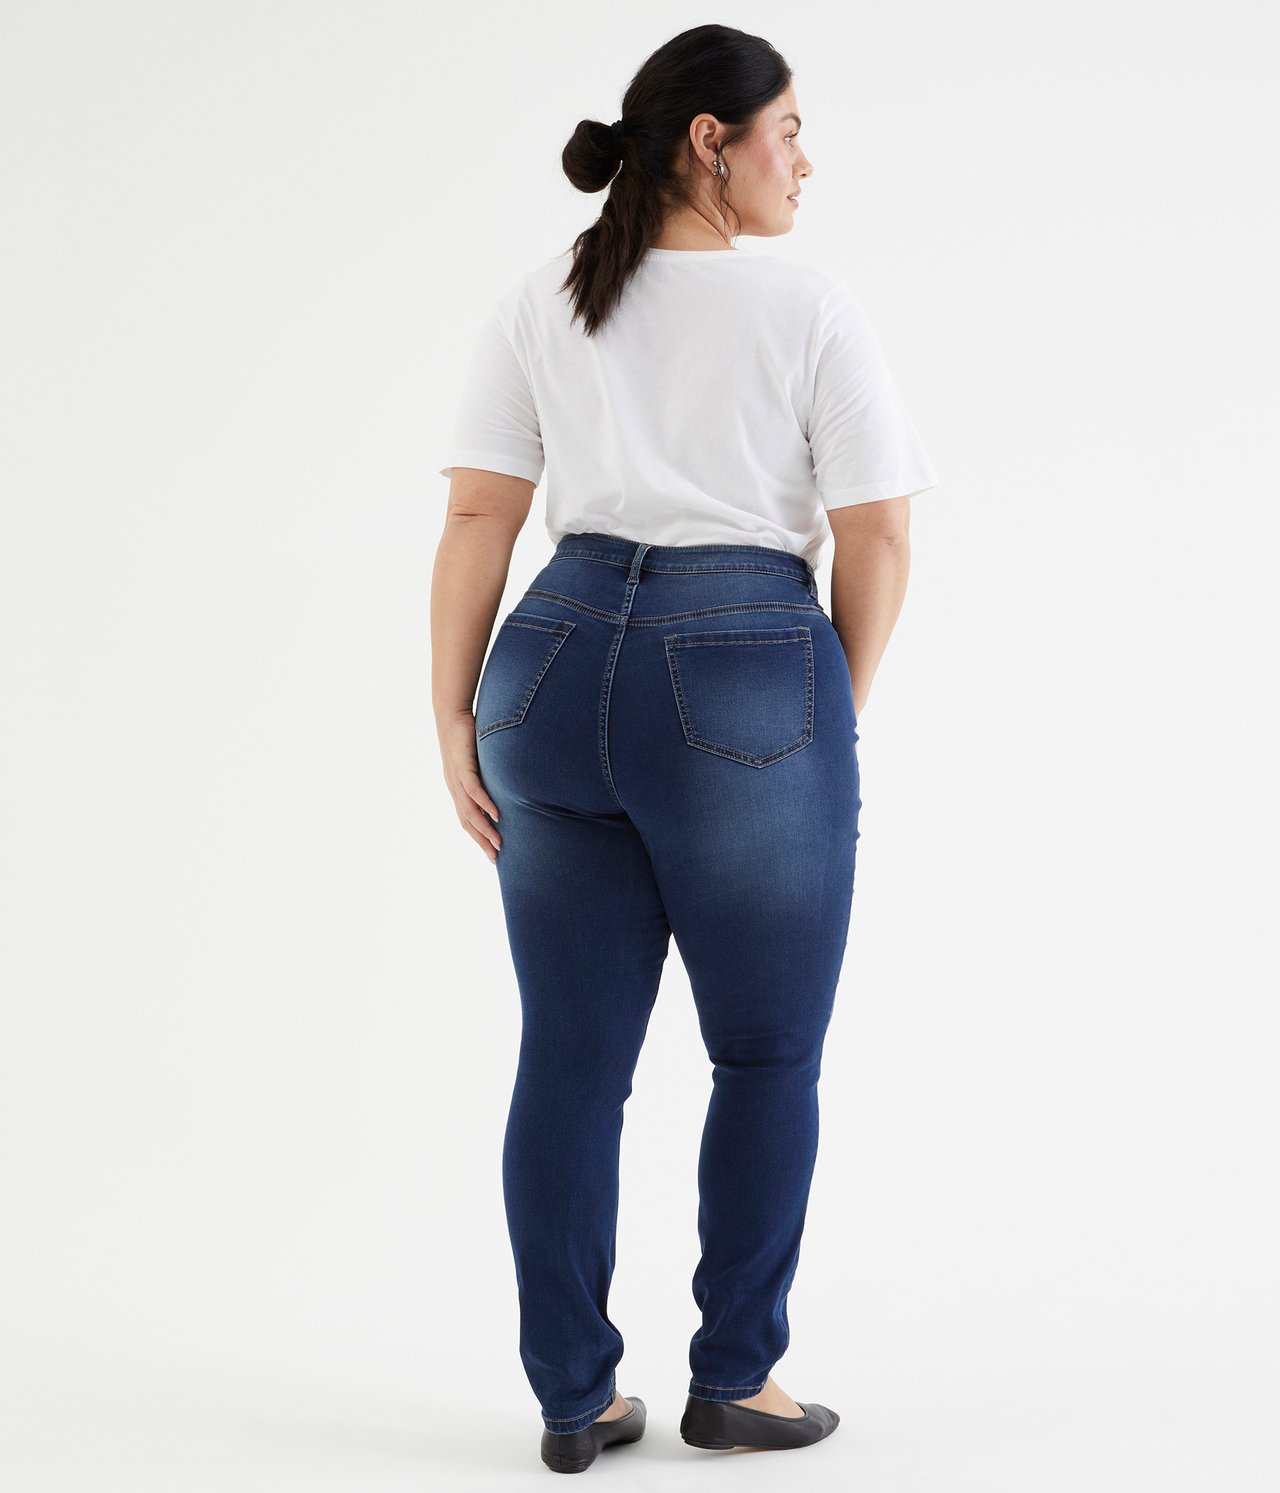 Ebba slim jeans extra long leg Mörk denim - null - 3